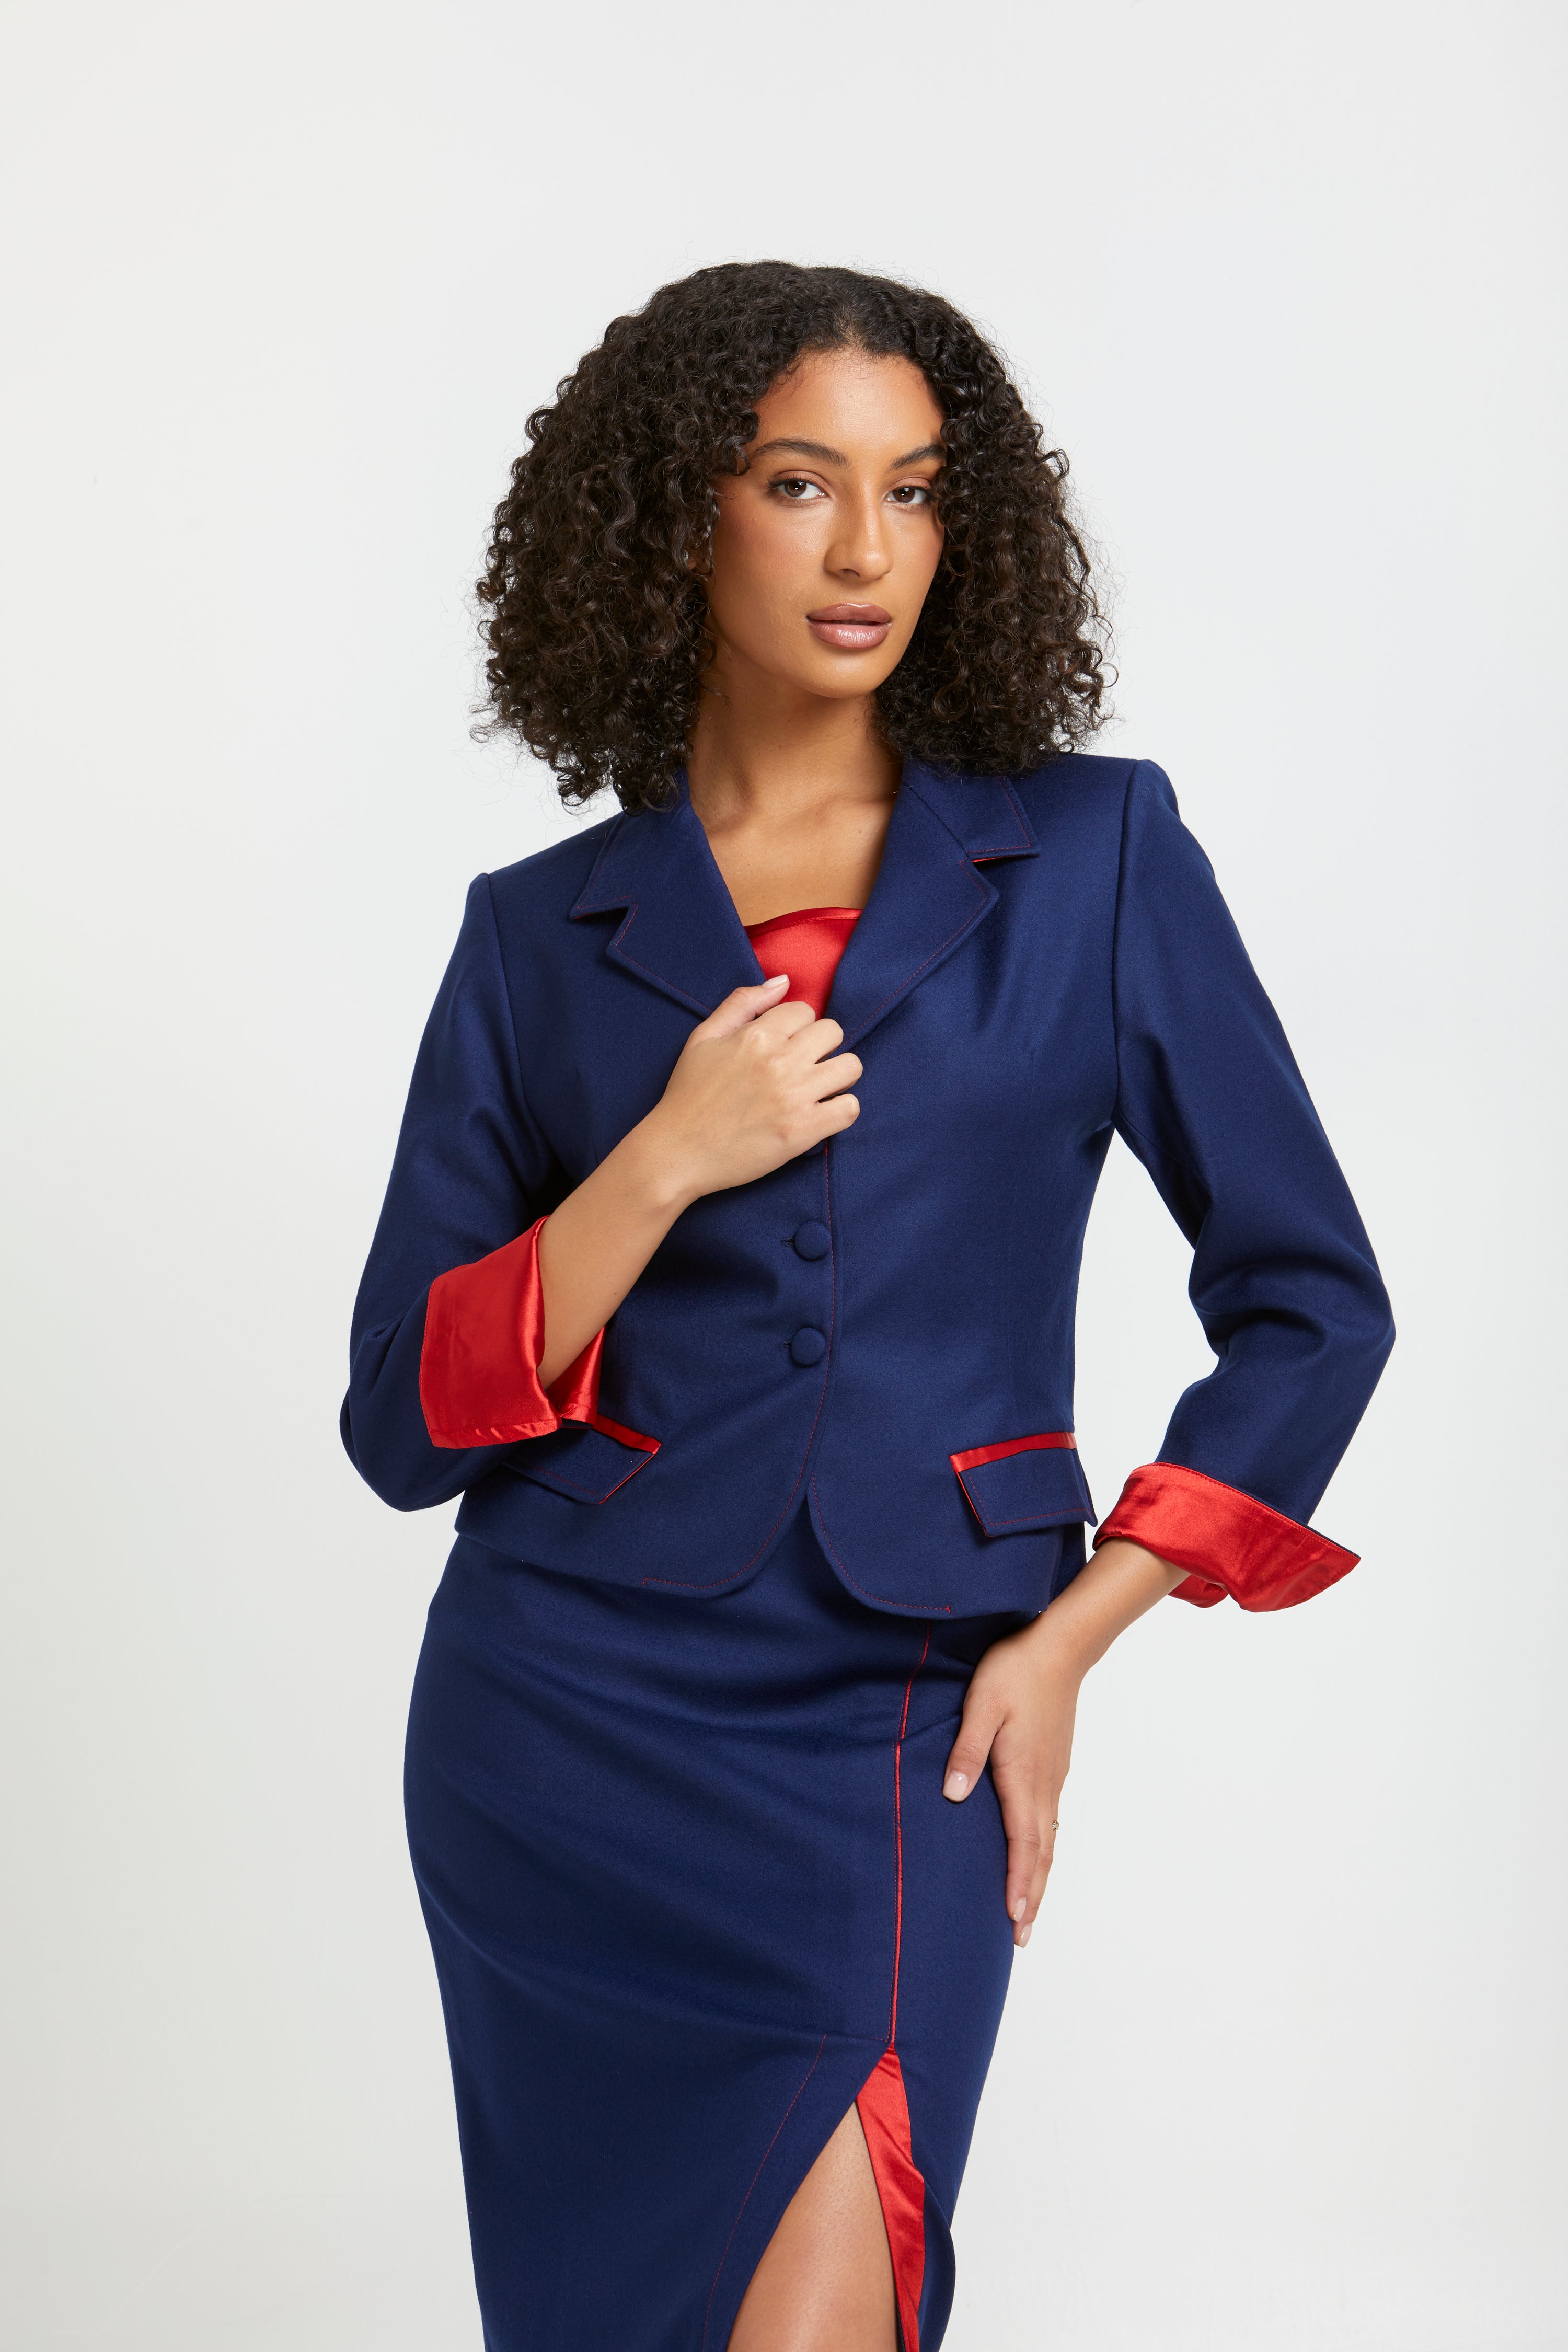 Sara Sabella 2-Piece Set Navy Blue Jacket & Midi Skirt Suit Set Closeup- Made in Italy Women's Suit clothing